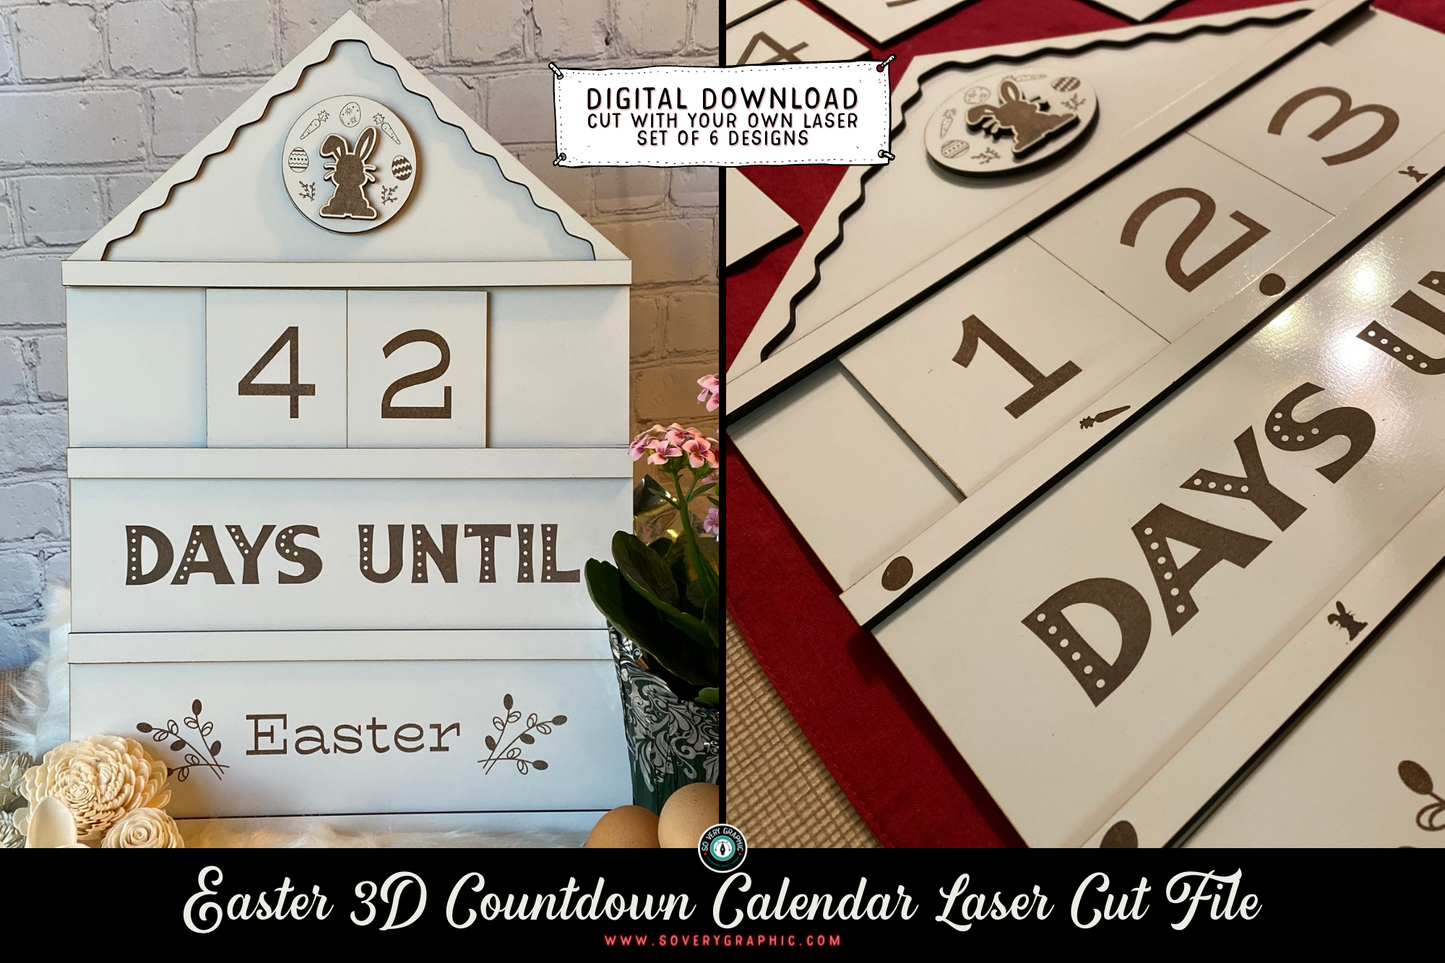 Easter Countdown Calendar 3D Laser Cut File